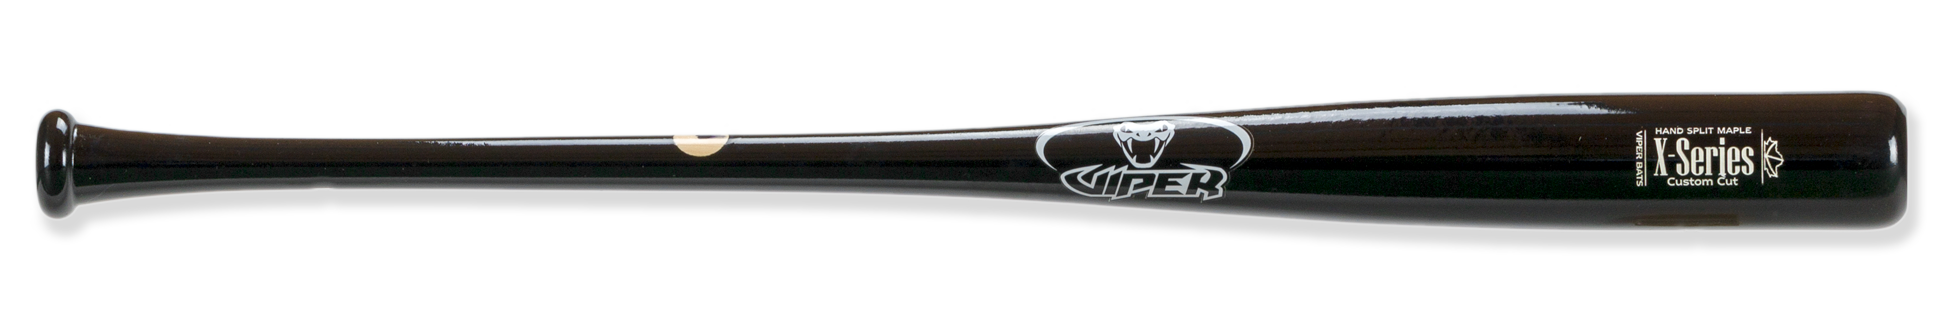 x series maple wood bat